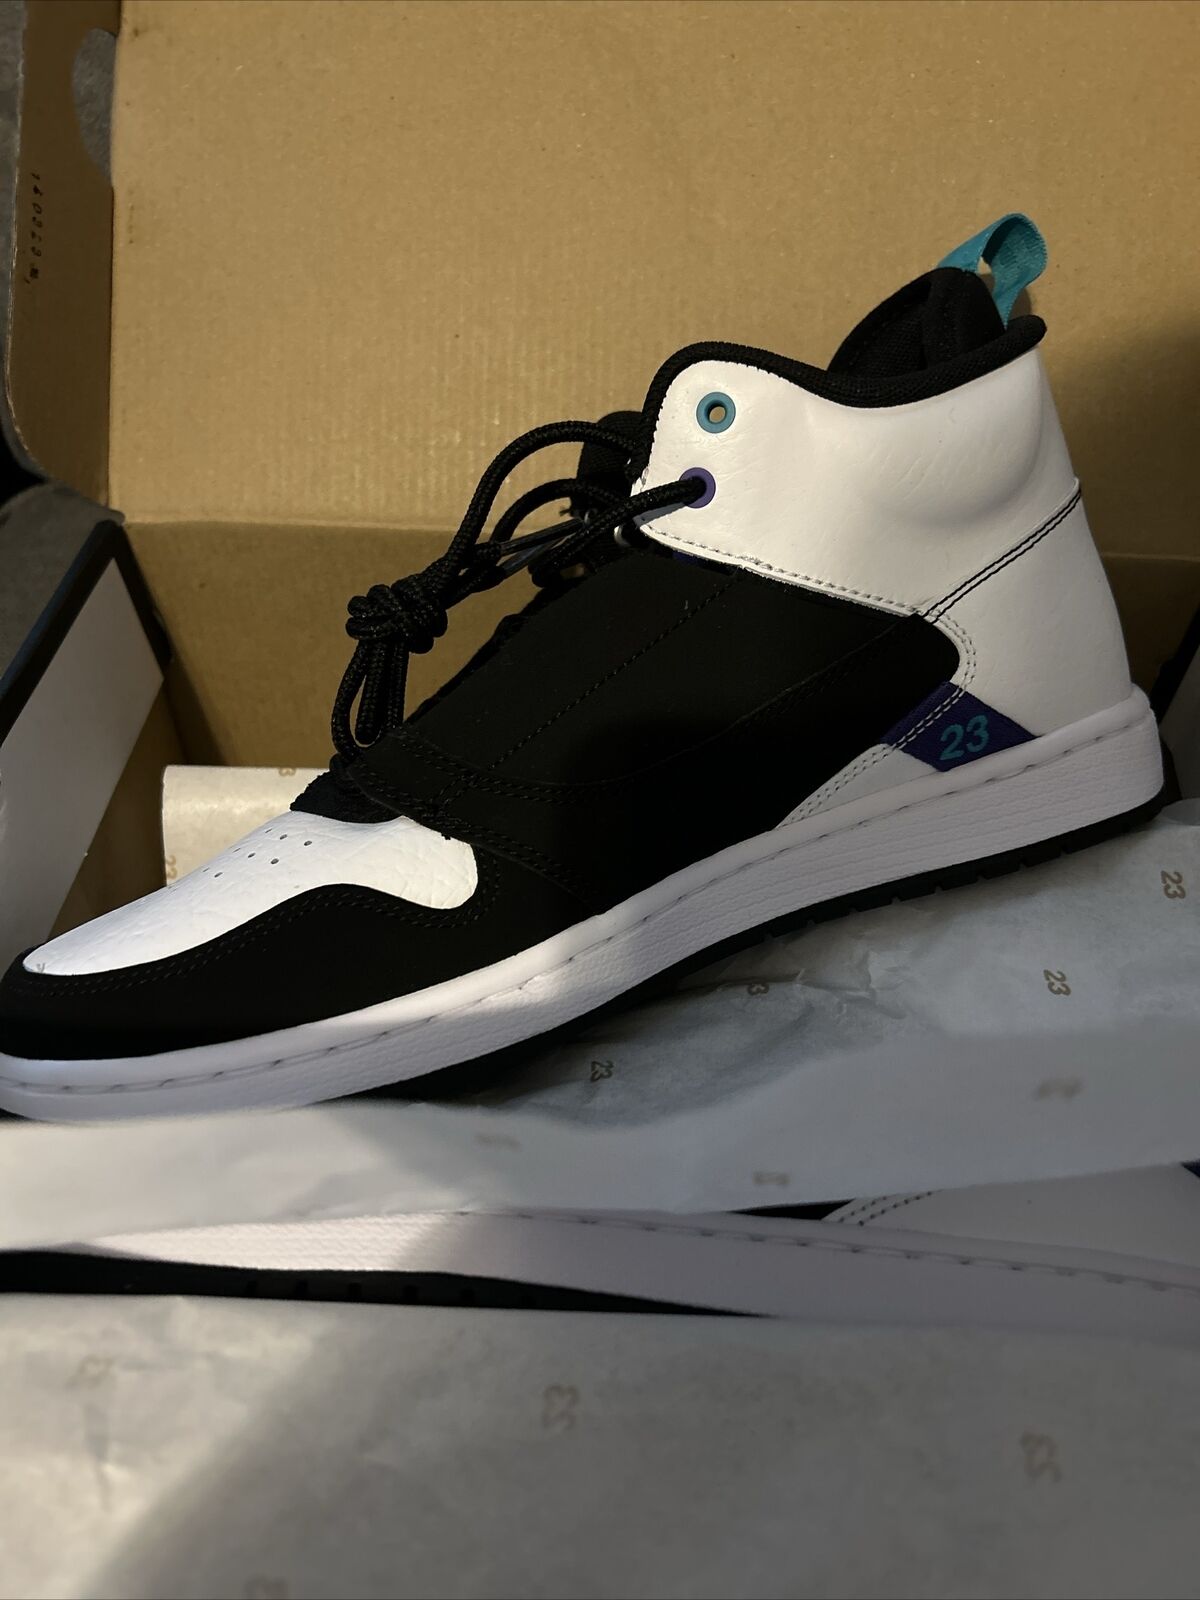 Unbelievable Mens Jordan Shoes Size 8.5 Fadeaway Black White Basketball NWB on eBay